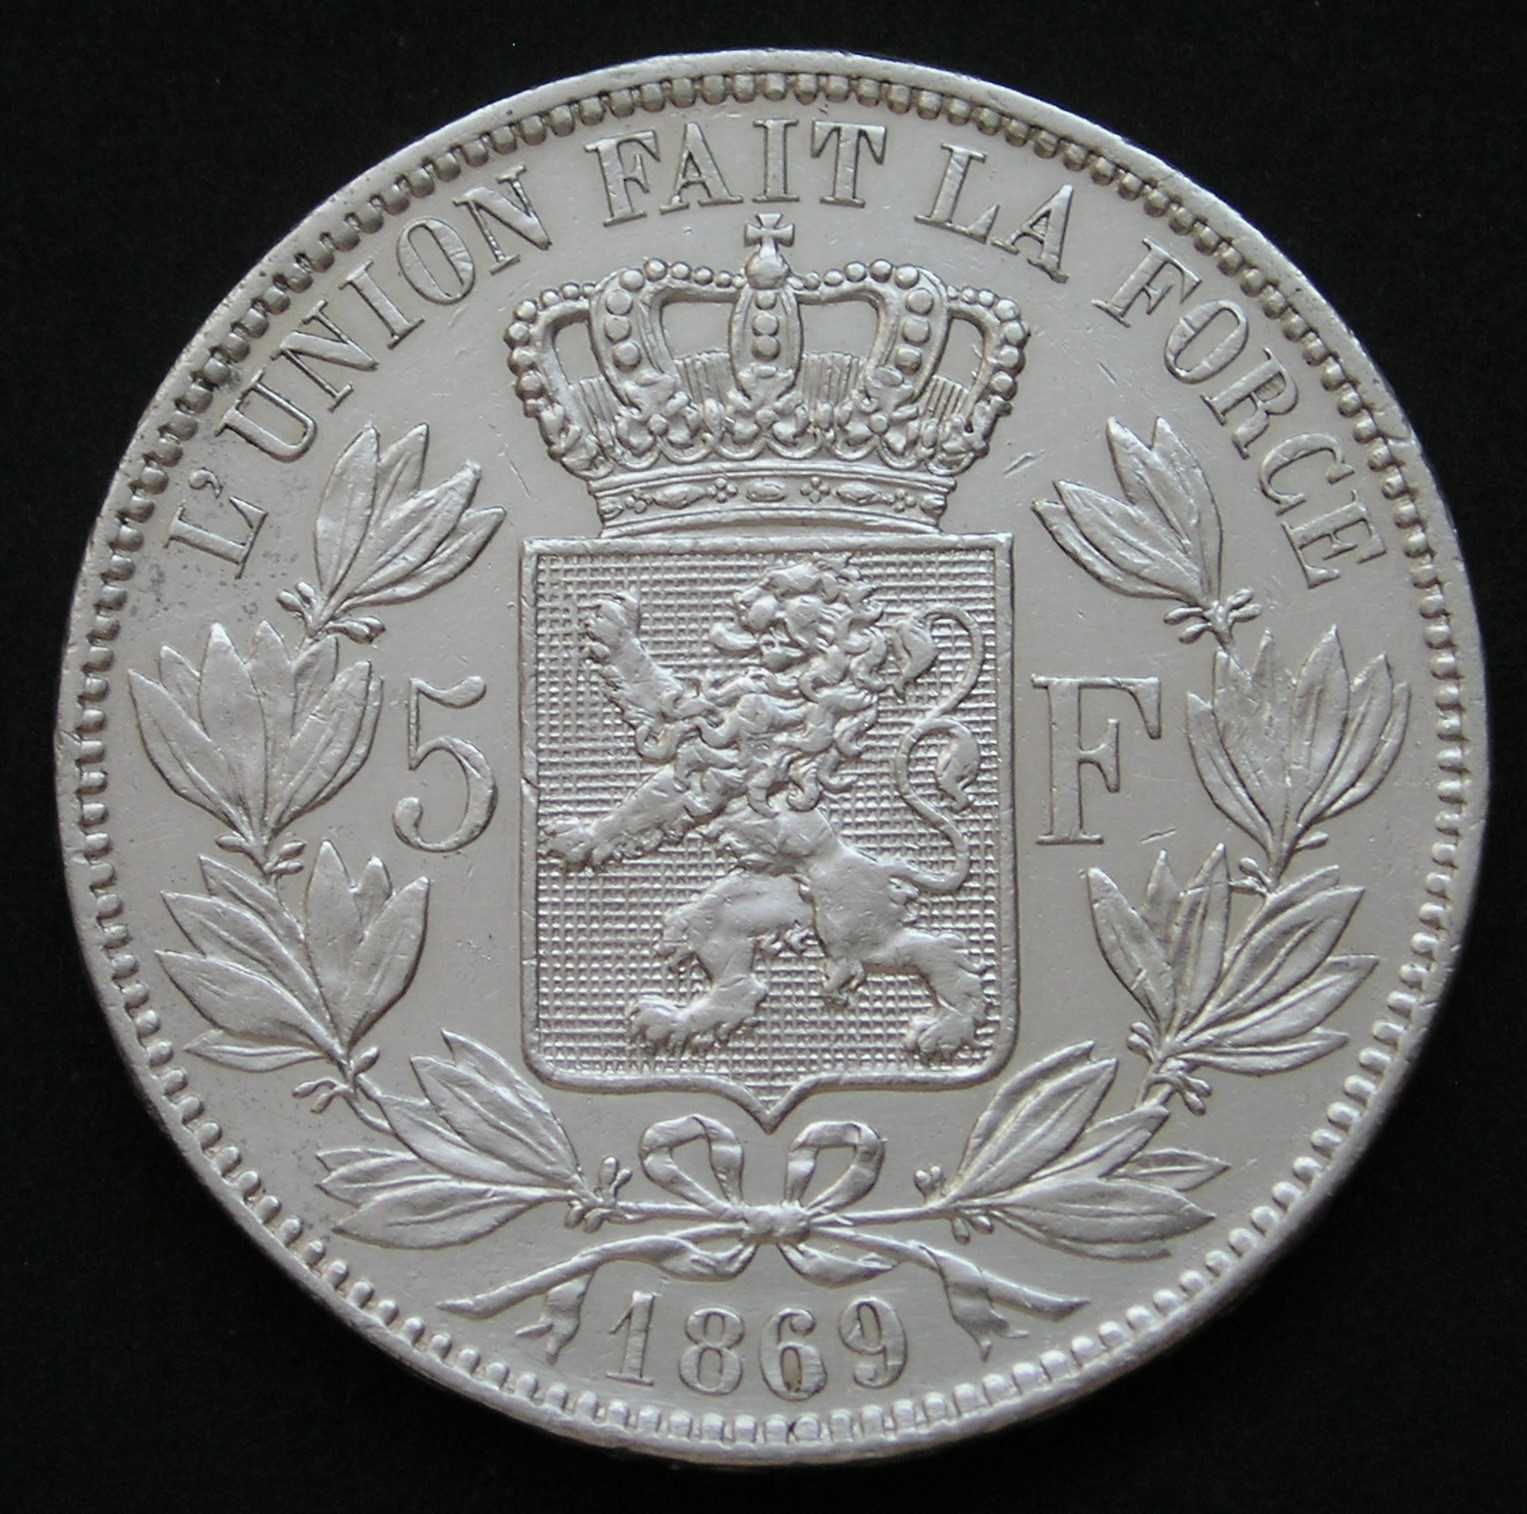 Belgia 5 franków 1869 - król Leopold II - srebro